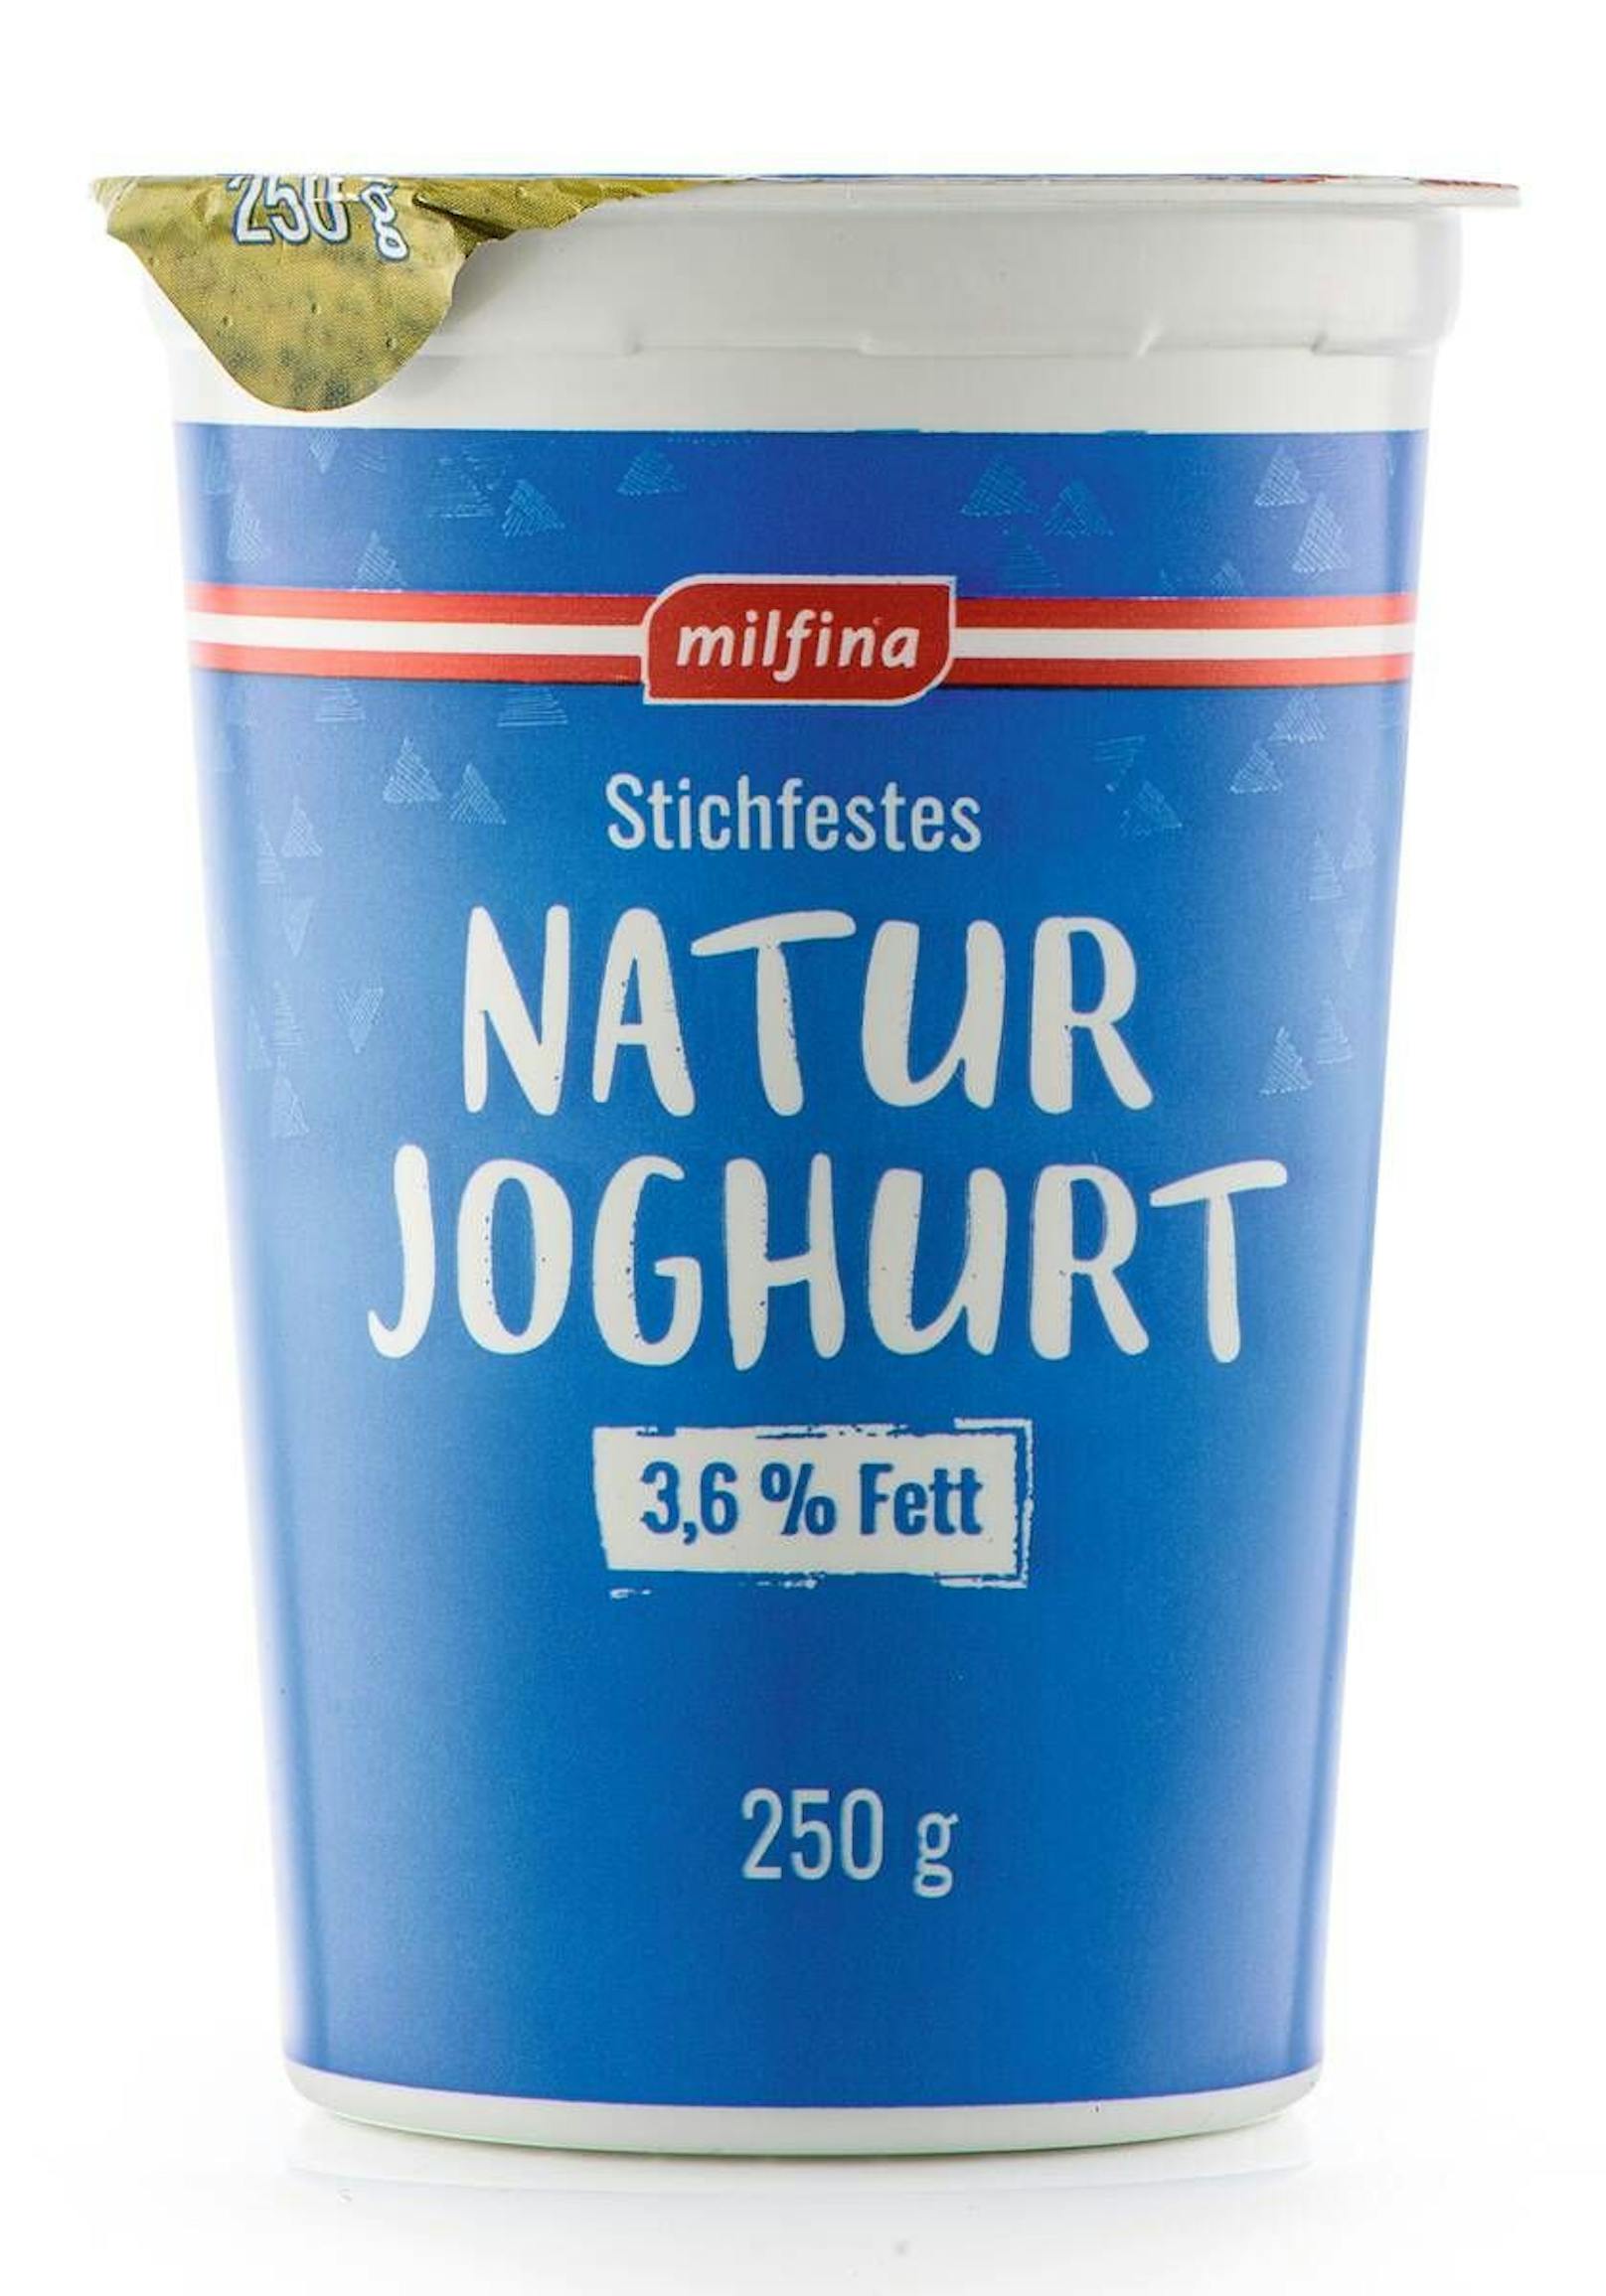 Natur-Joghurt.